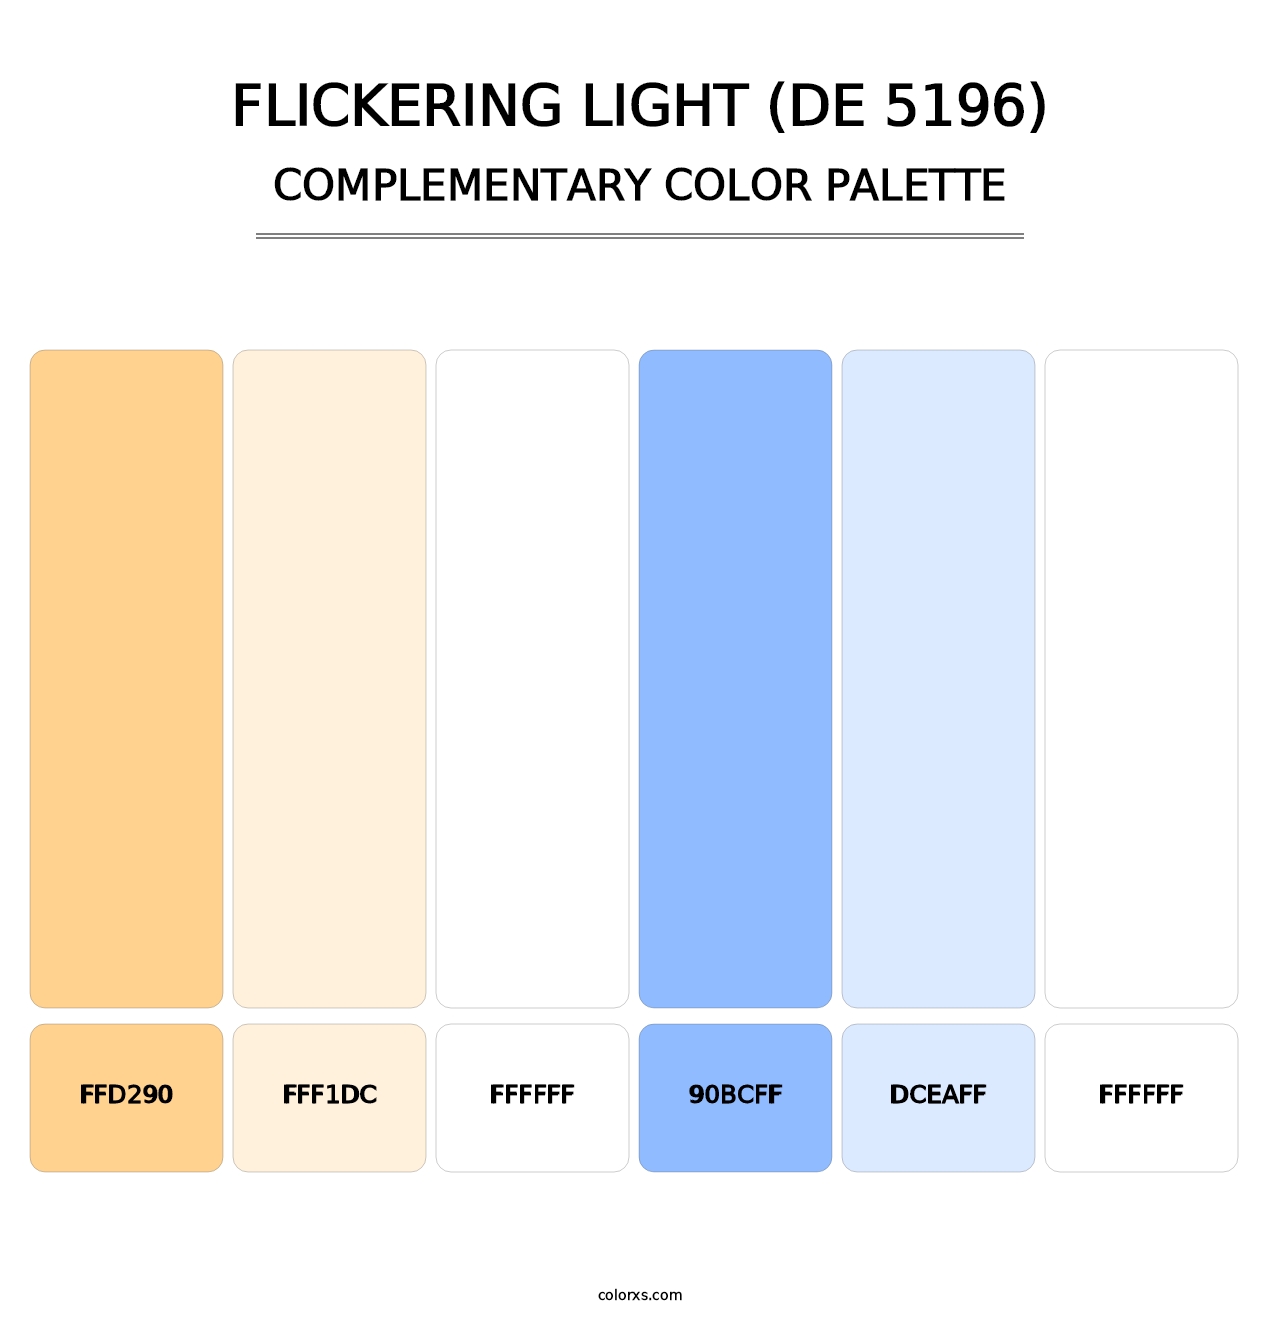 Flickering Light (DE 5196) - Complementary Color Palette